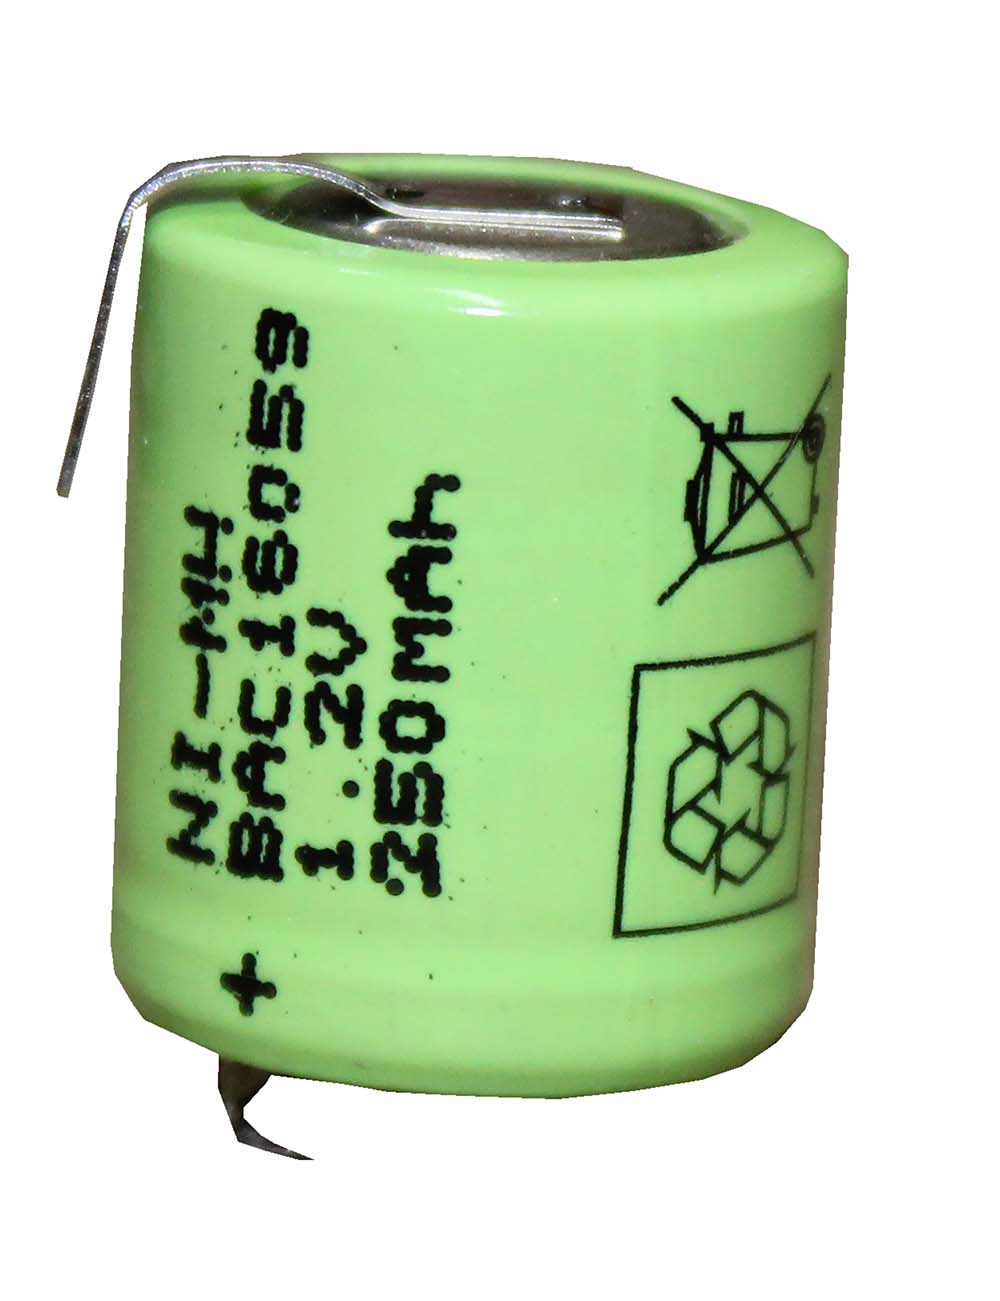 Bateria Ni-Mh 1,2 v 15 mm longitud. - K605910 - CLASSIC